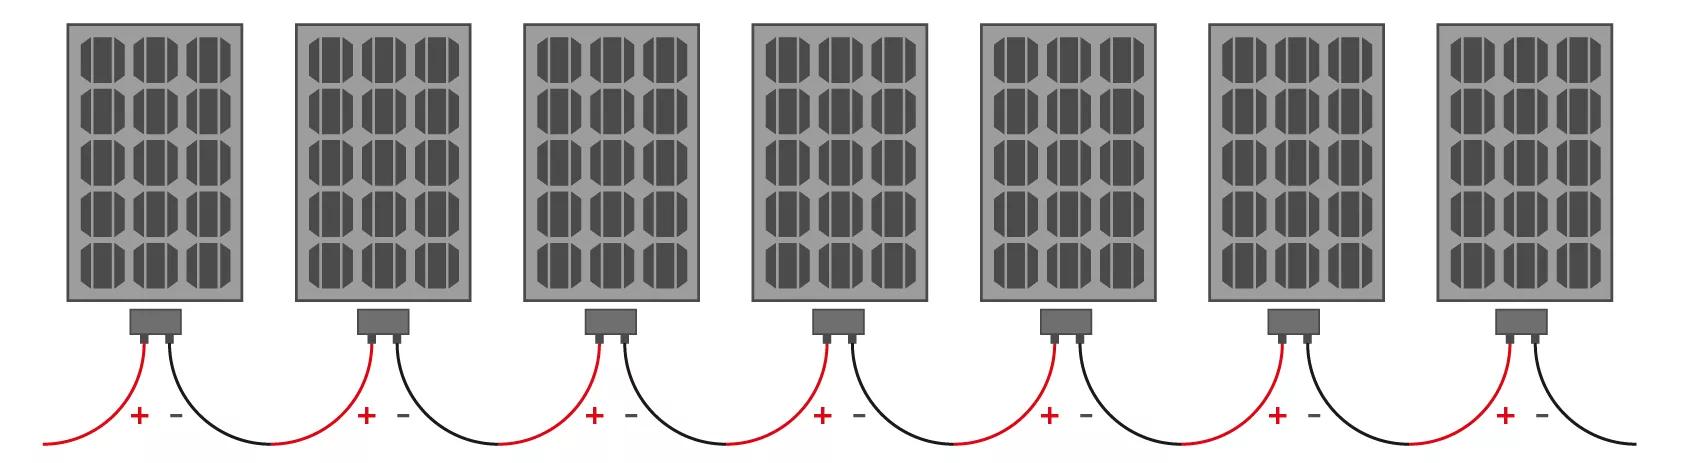 Wiring solar panels in series diagram